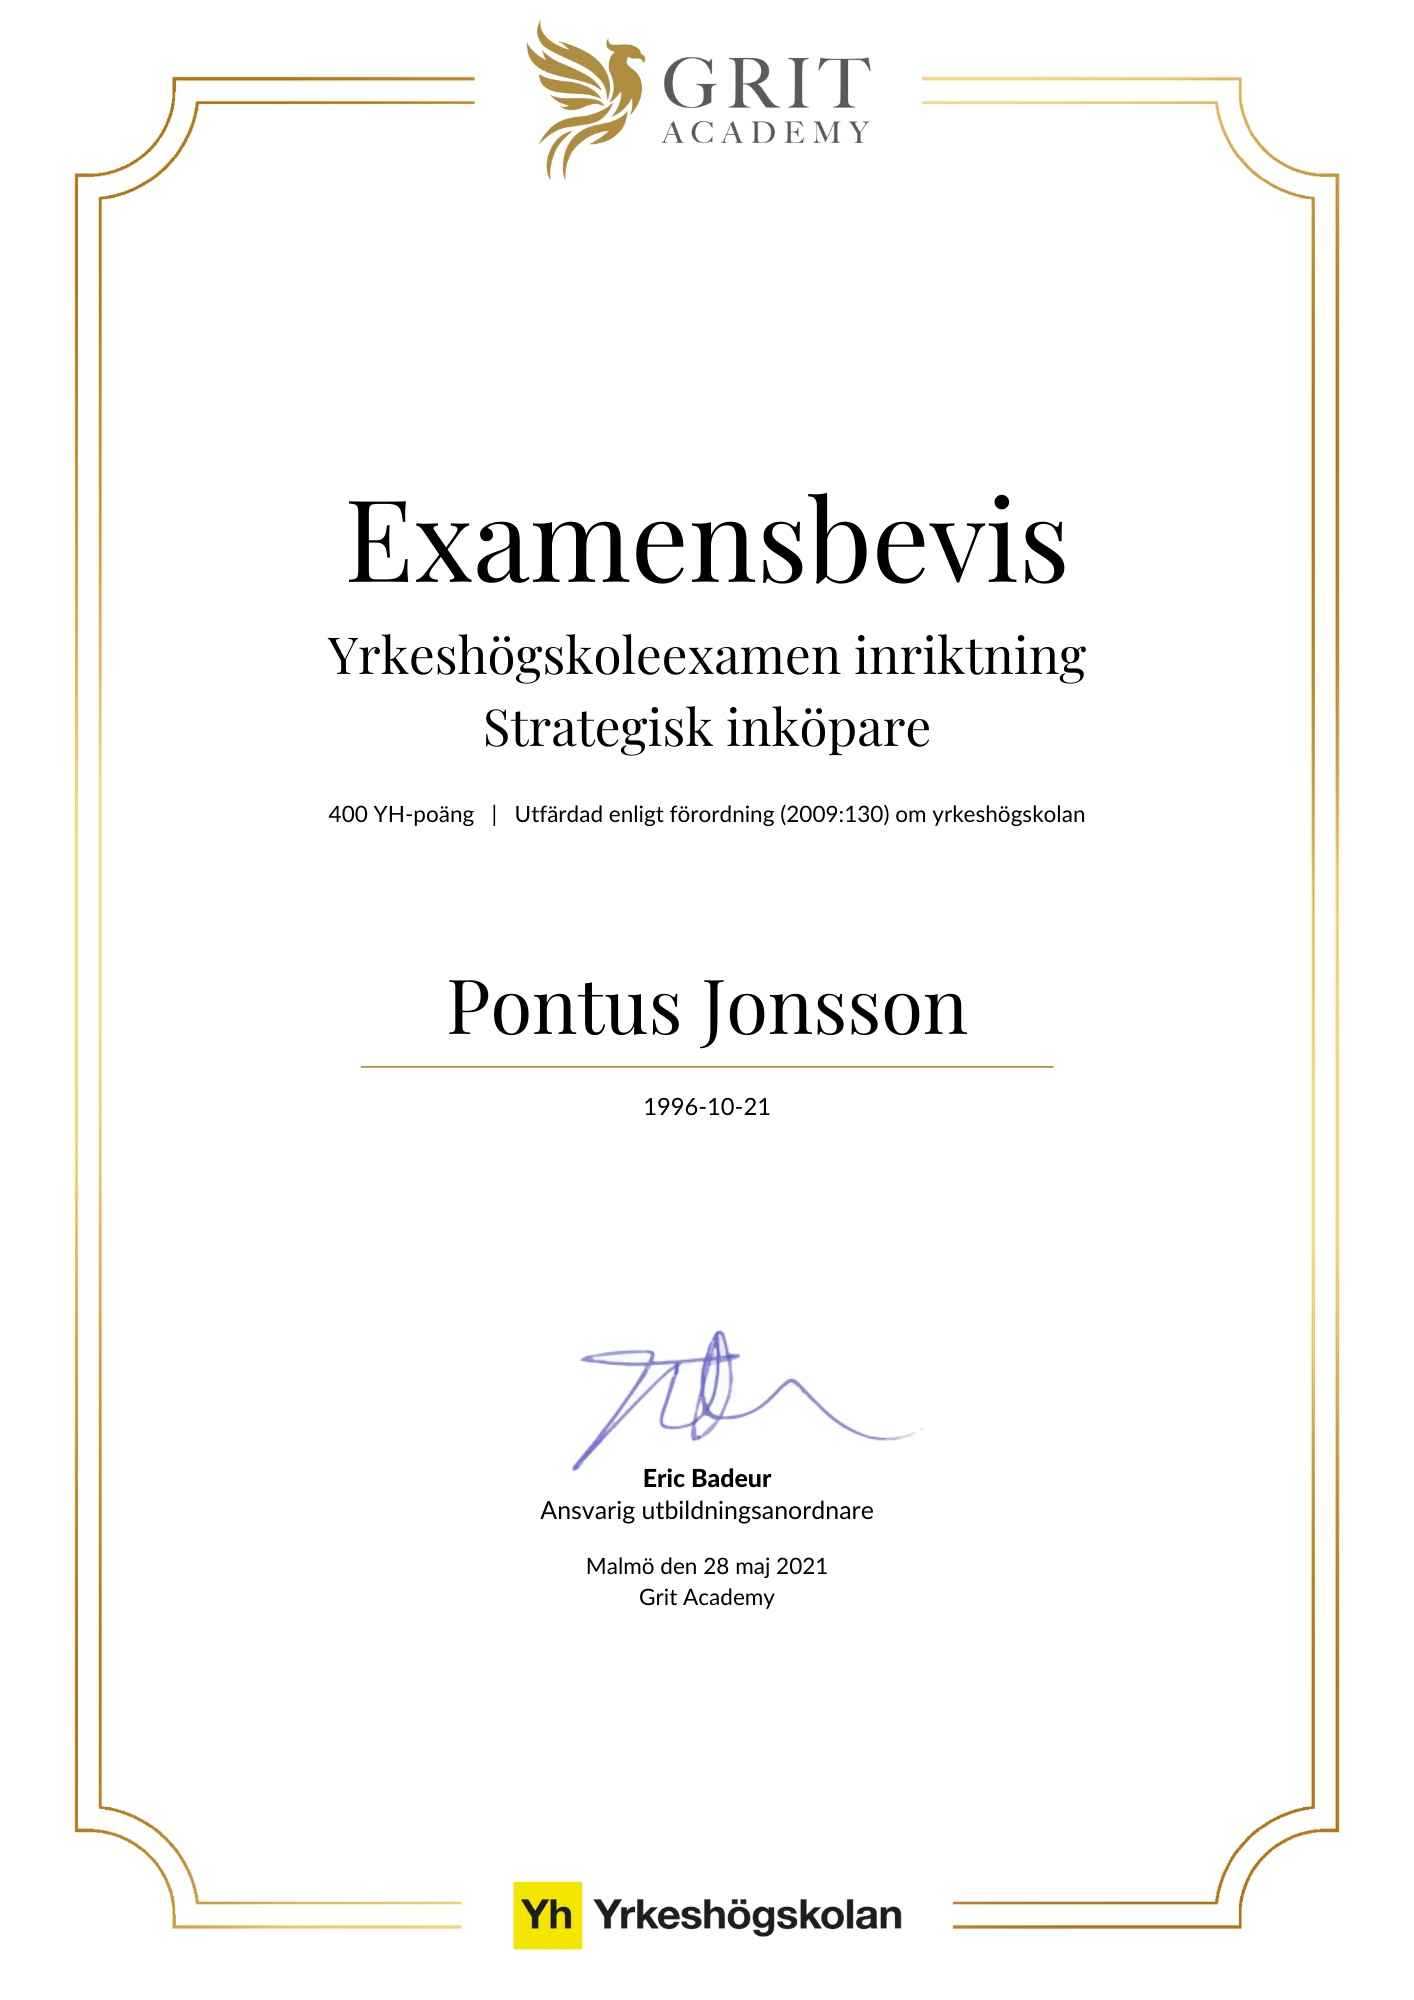 Examensbevis Pontus Jonsson - 1